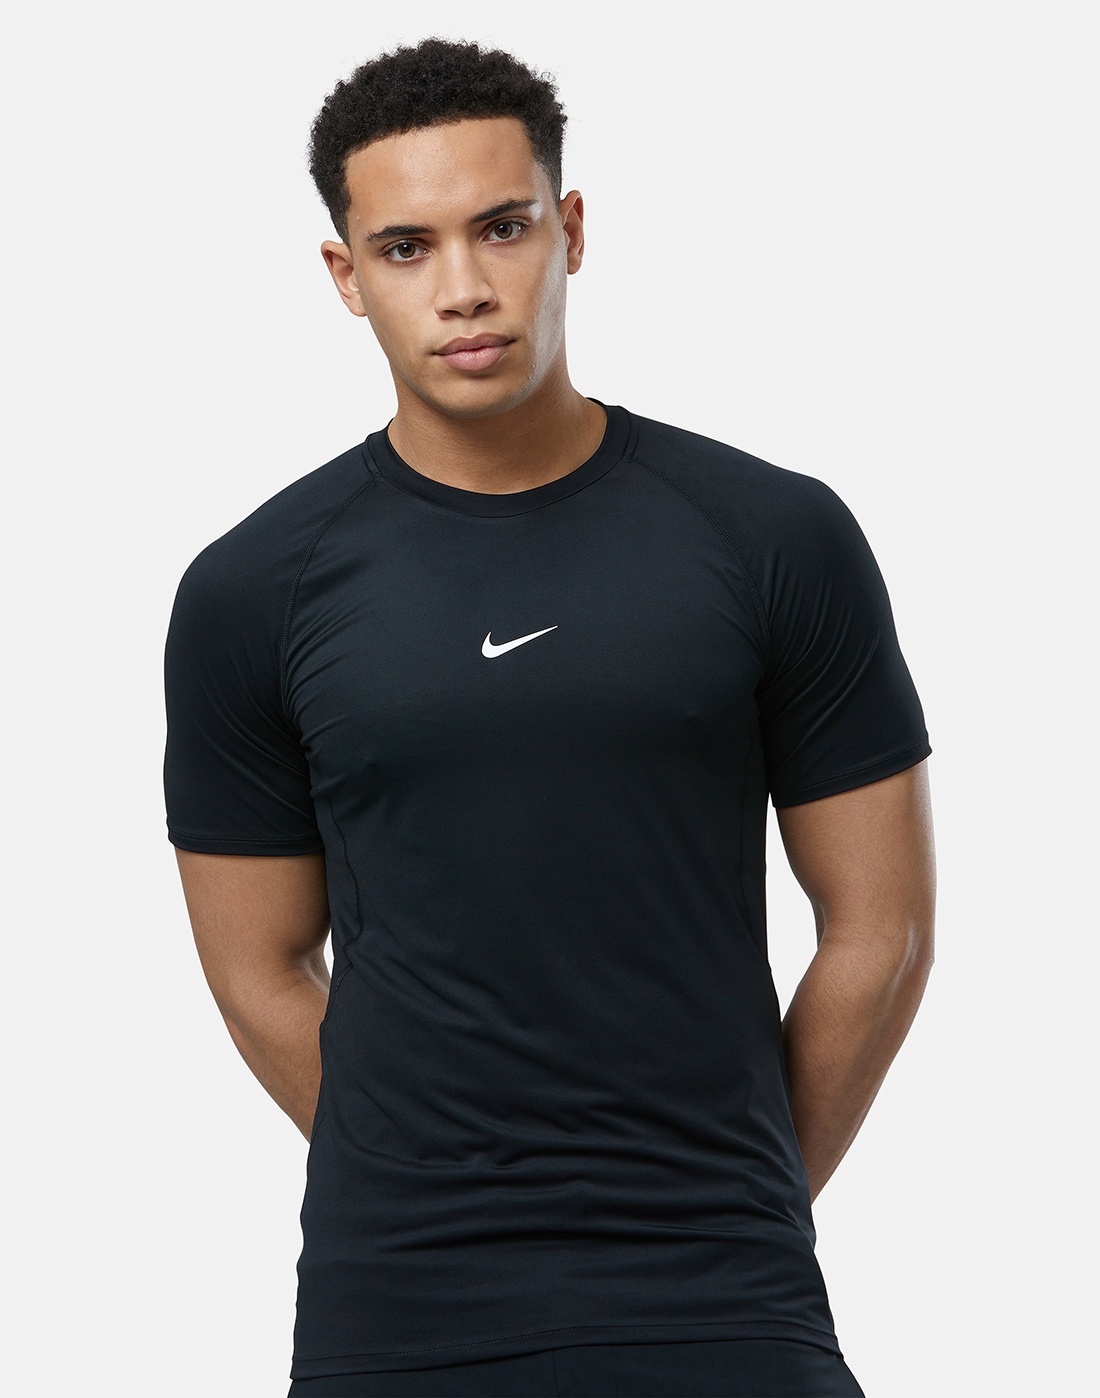 Nike Mens Training T-Shirt - Black | Life Style Sports IE